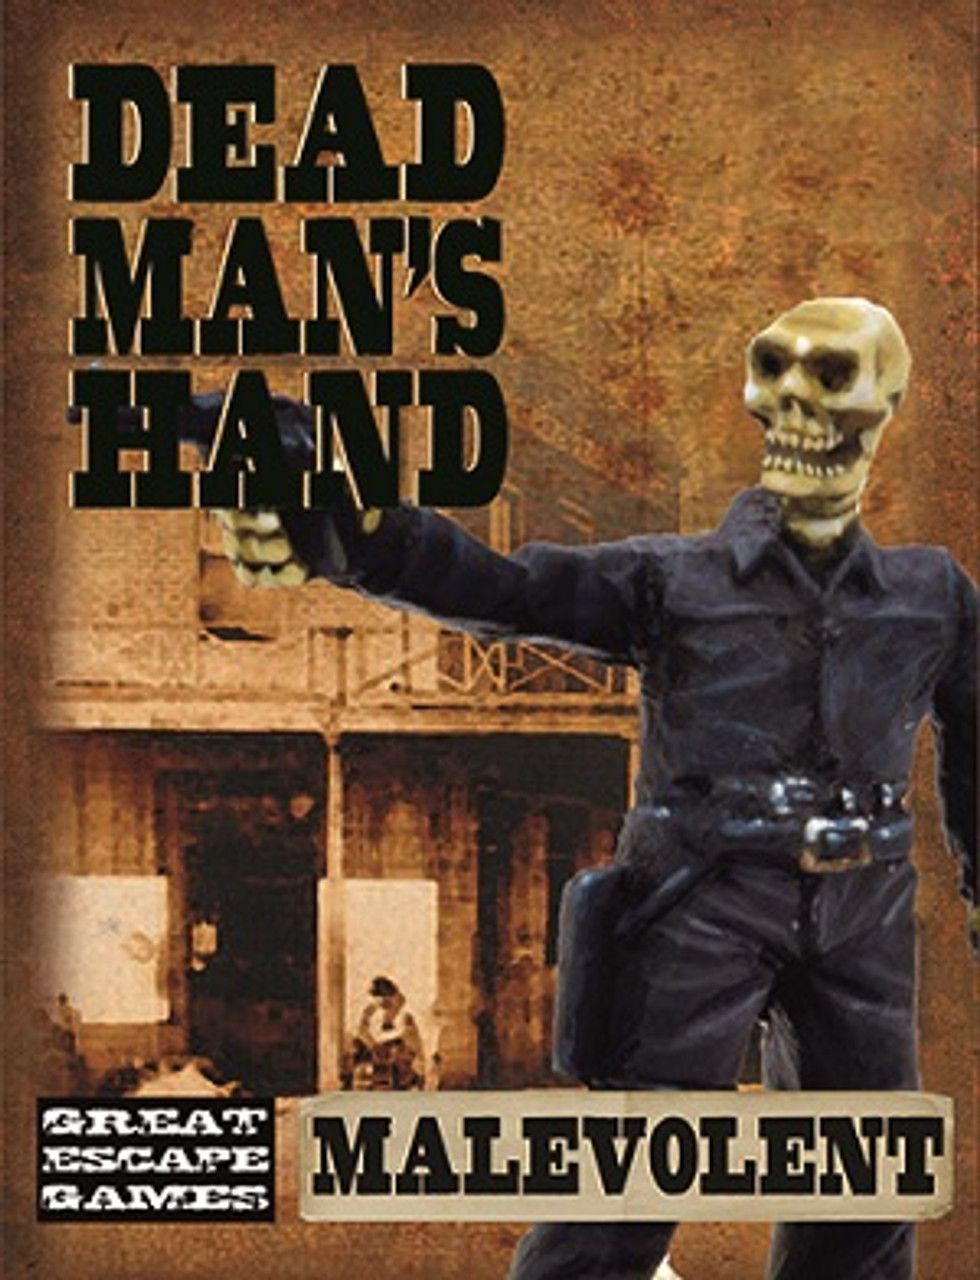 The Curse of Dead Man's Hand "The Malevolent Seven" - CDMH005